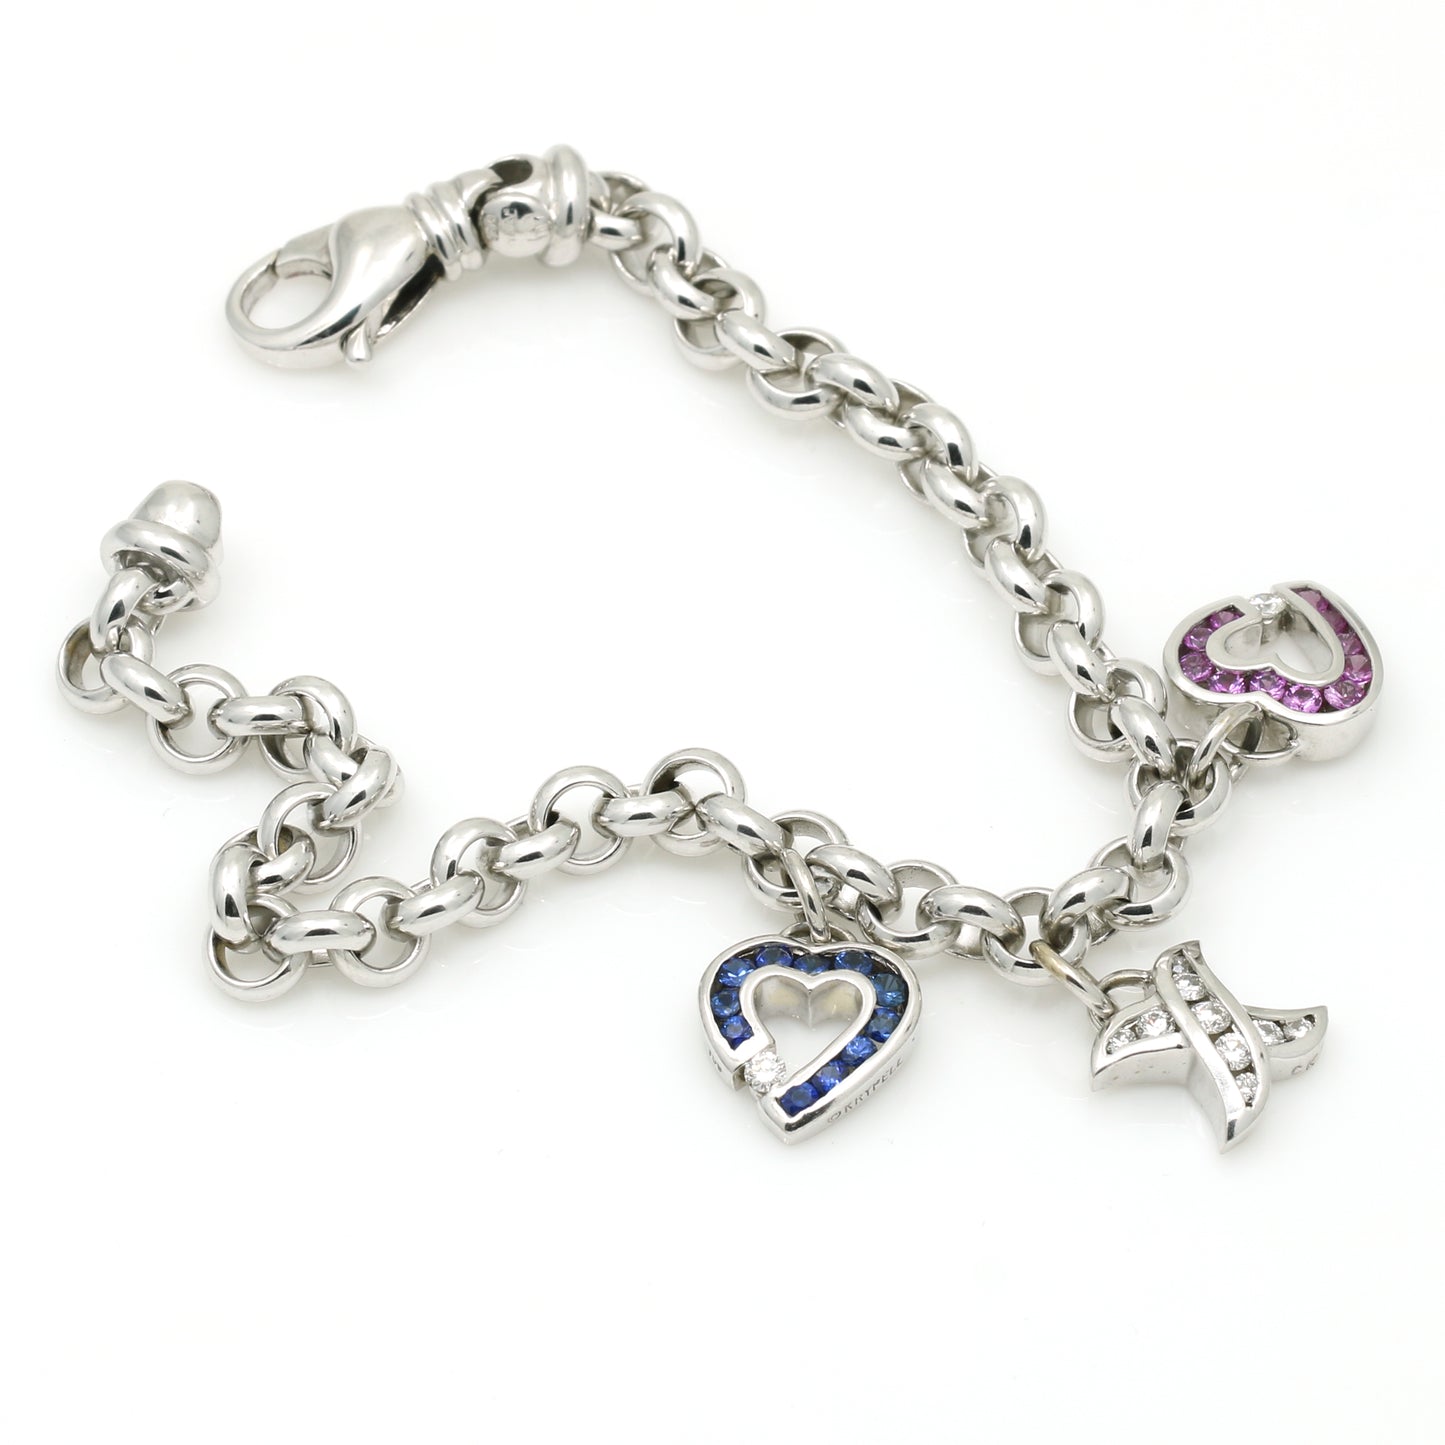 Charles Krypell Sapphire Diamond Charm Bracelet - 18k White Gold - Pink and Blue